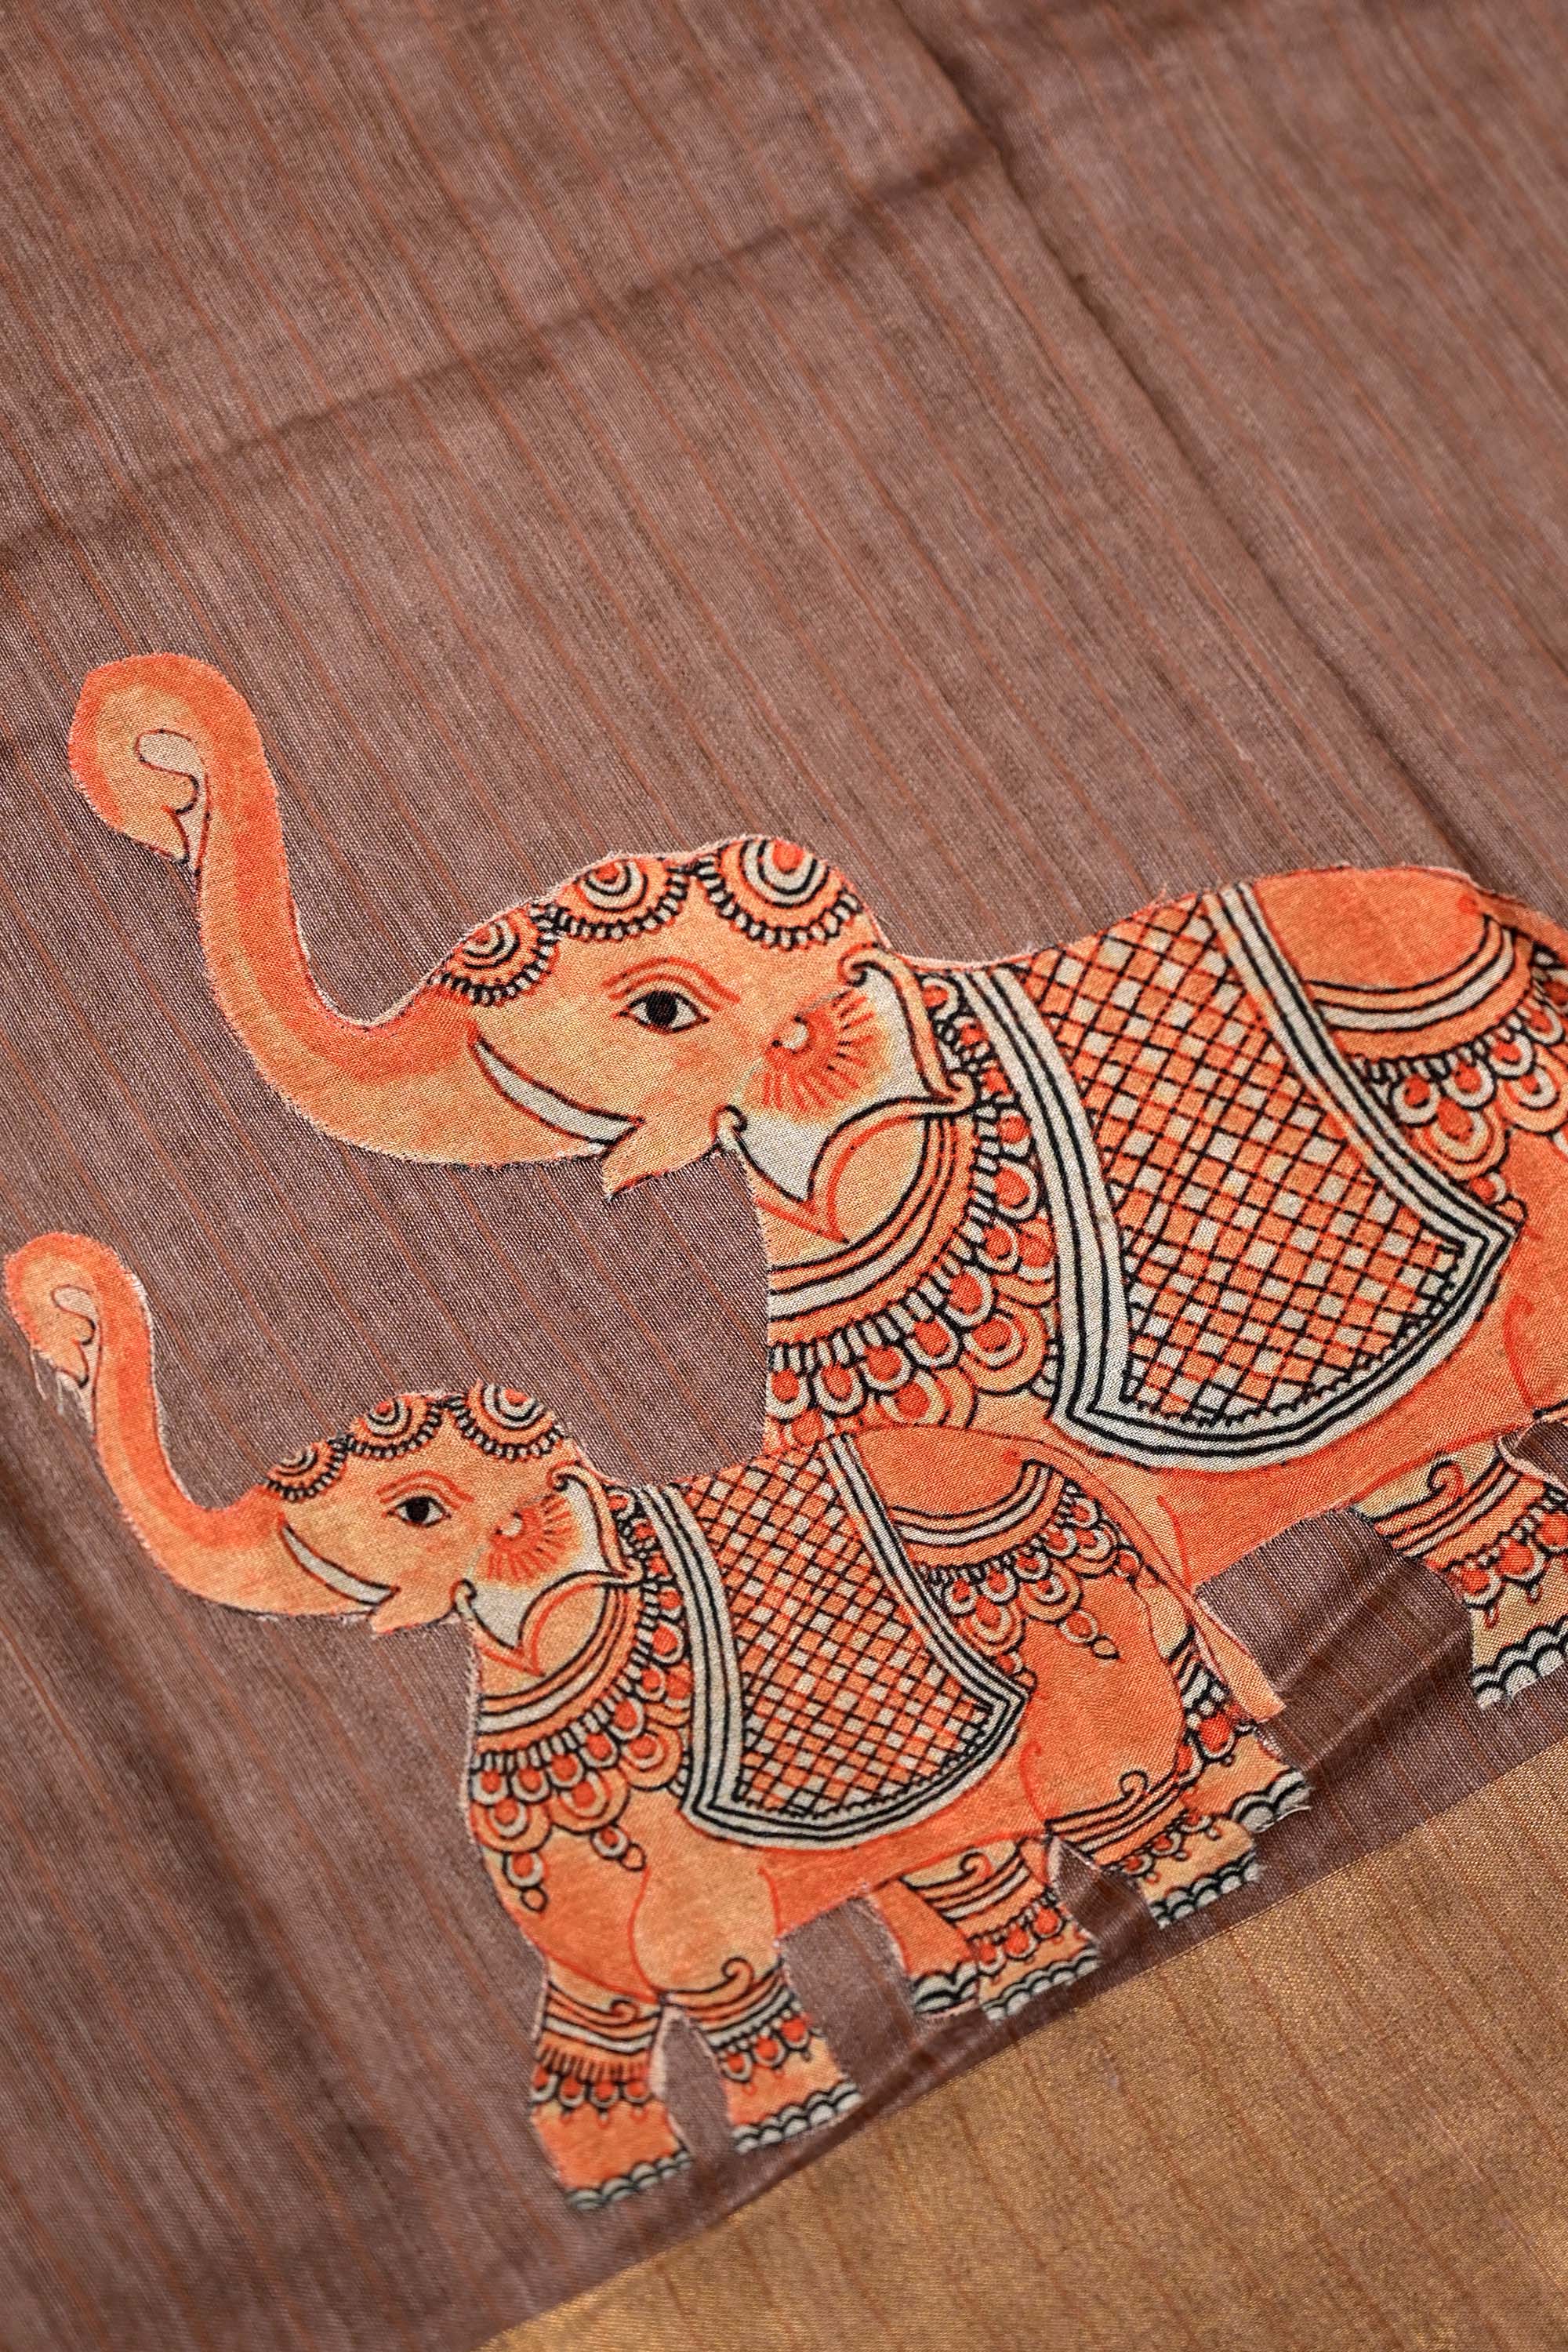 Tussar jute saree brown color with kalamkari prints, big printed pallu, small kaddi border and printed blouse